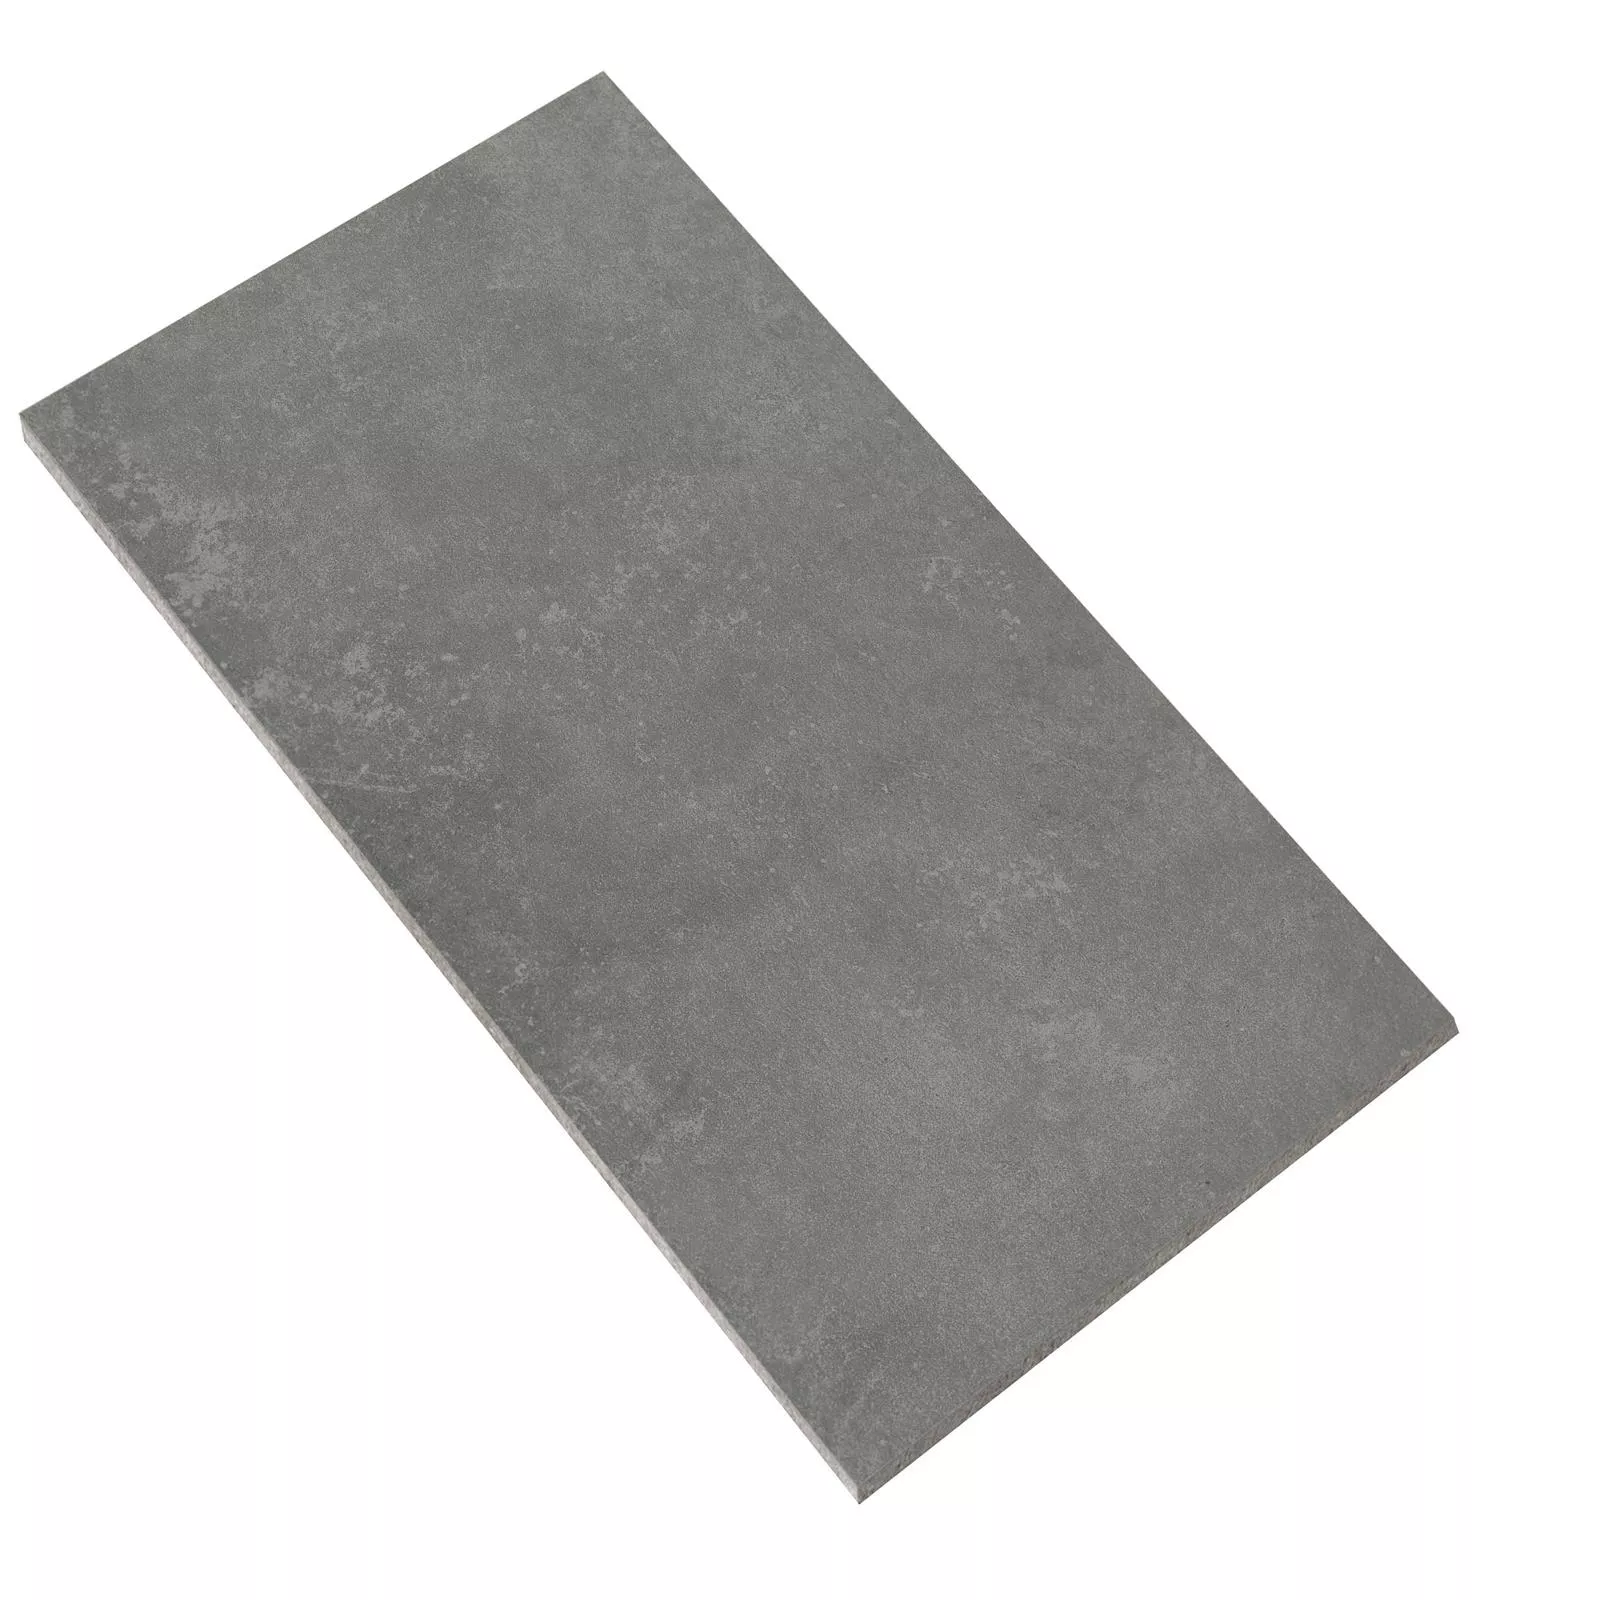 Pavimentos Aspecto De Cemento Nepal Slim Gris Oscuro 30x60cm